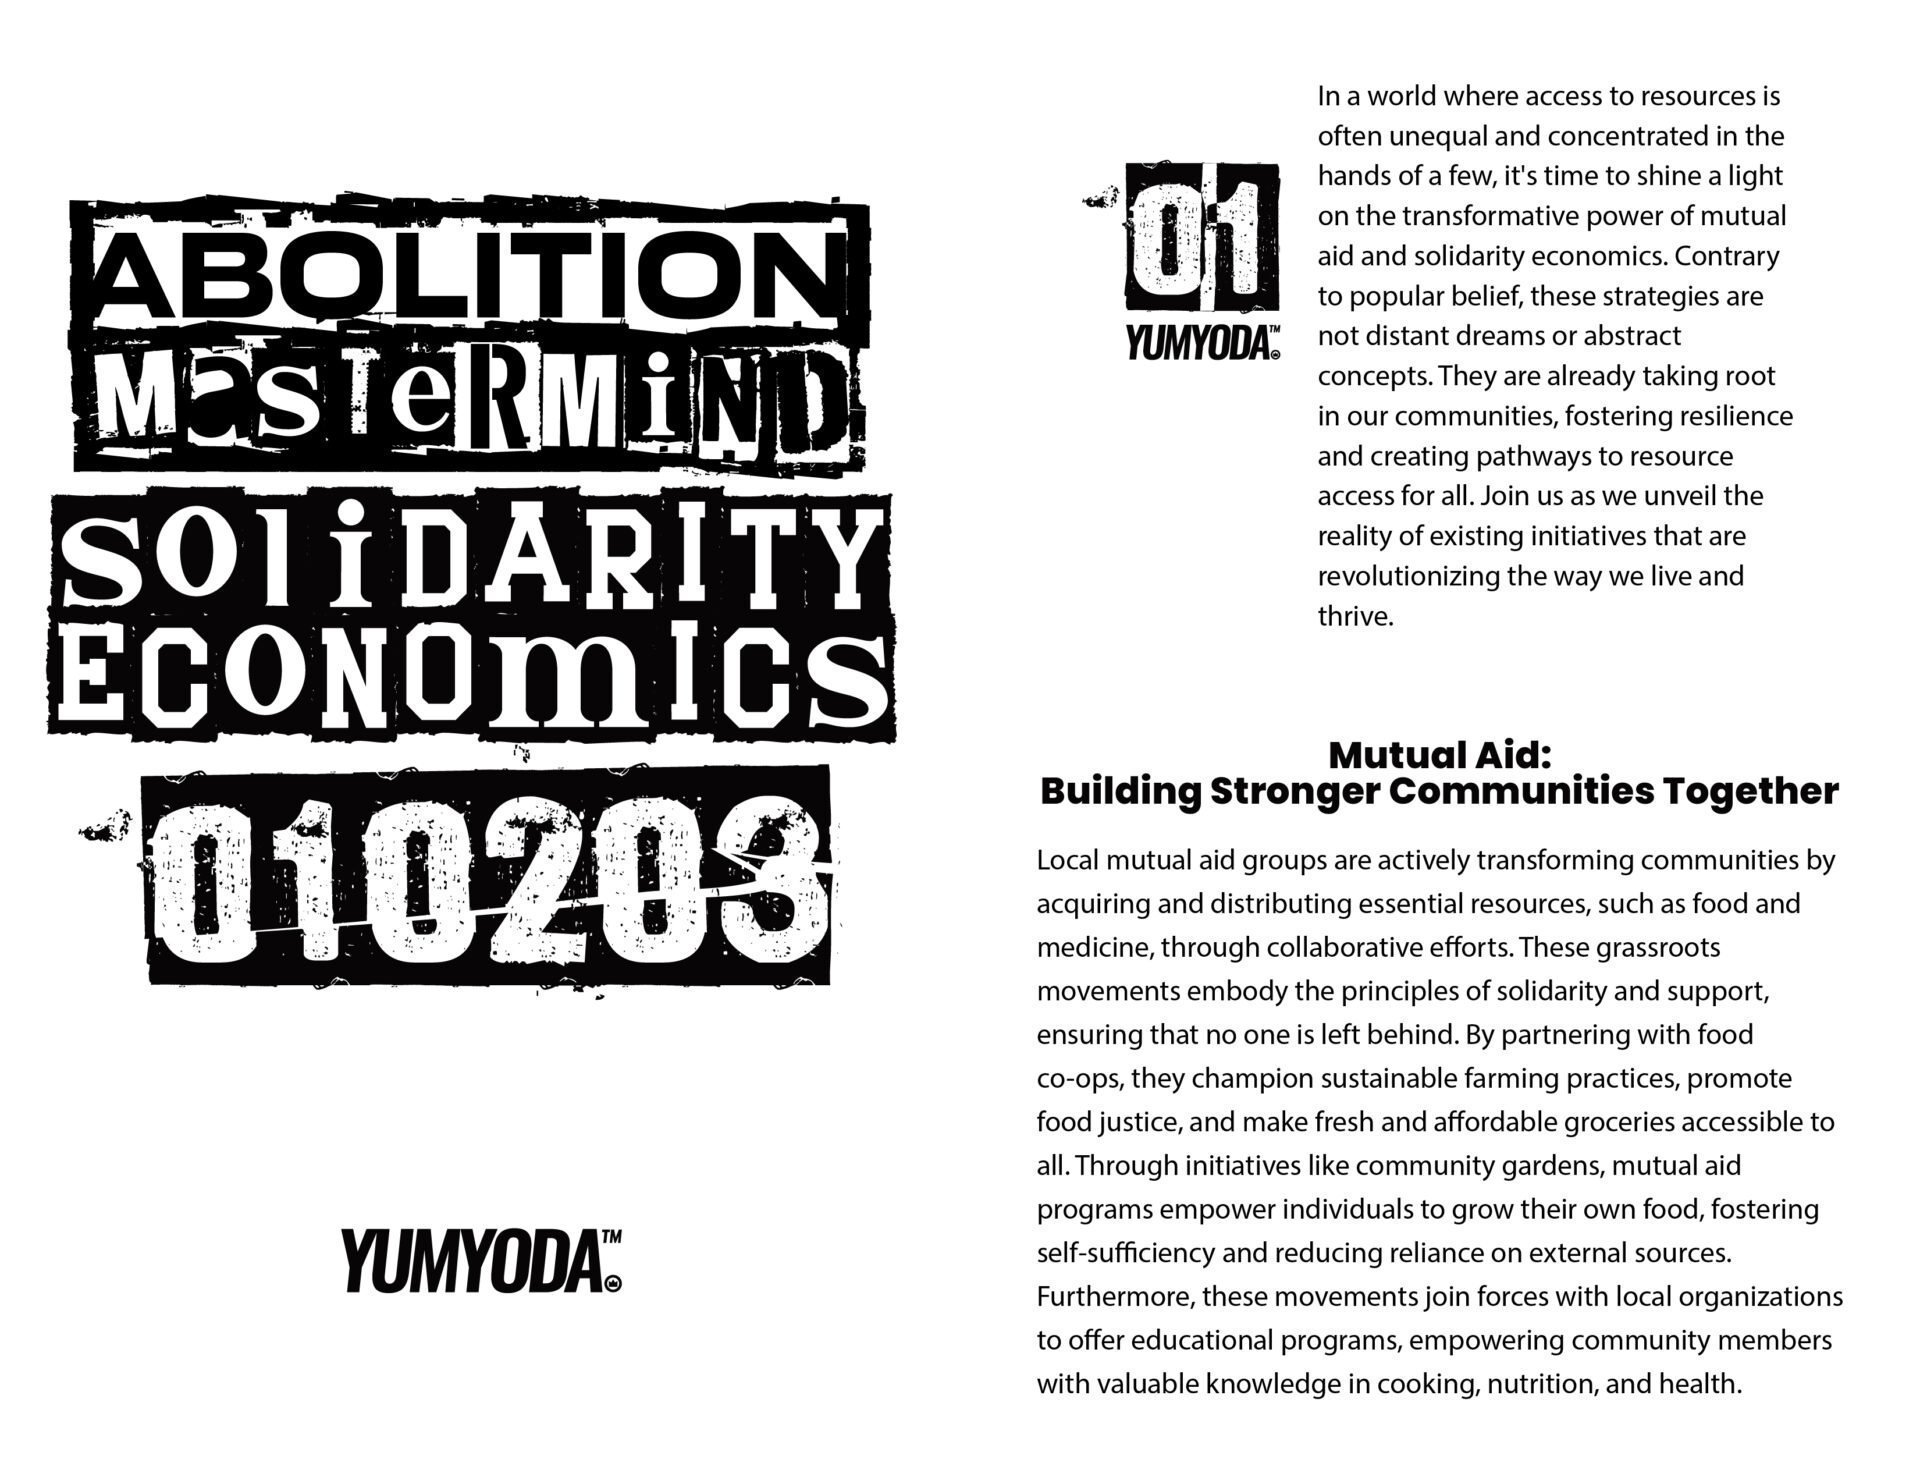 Mutual Aid Page 1 Abolition Mastermind Solidarity Economics 03B